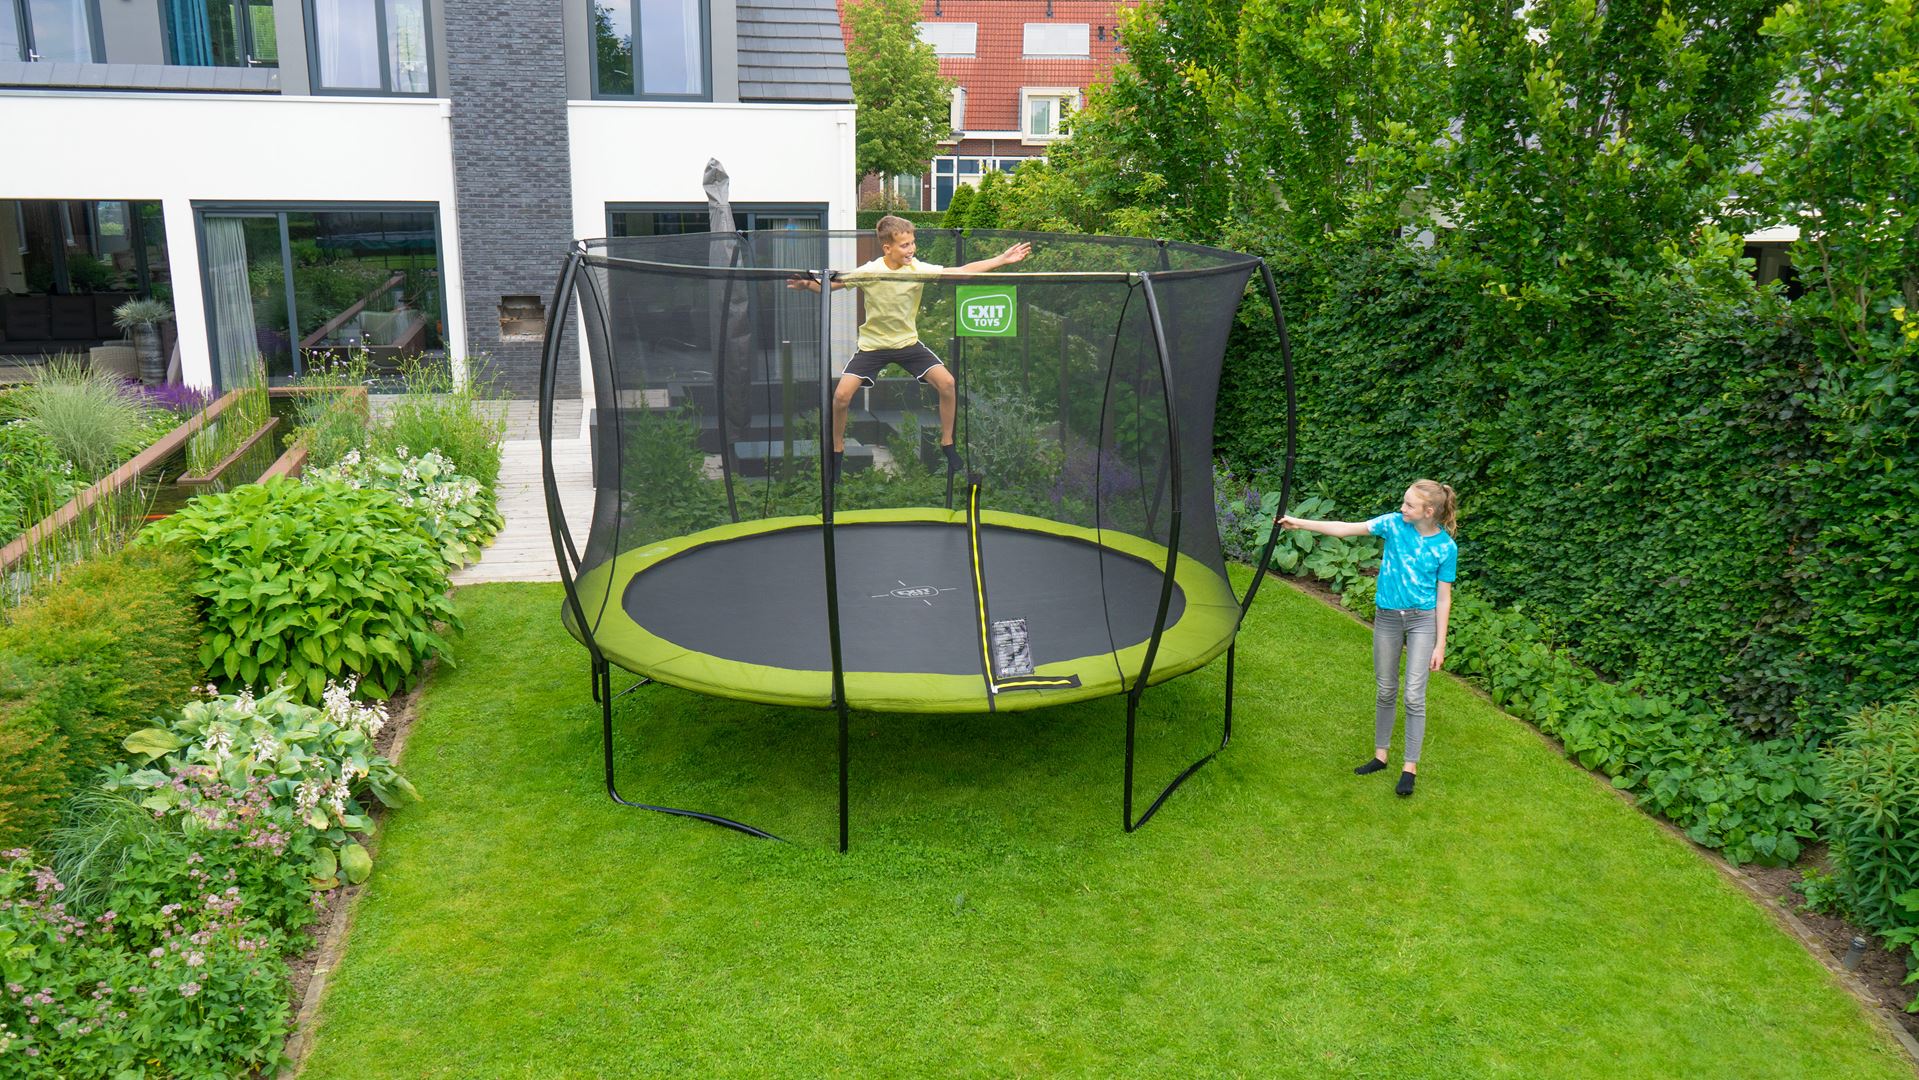 EXIT-Silhouette-trampoline-366cm-groen